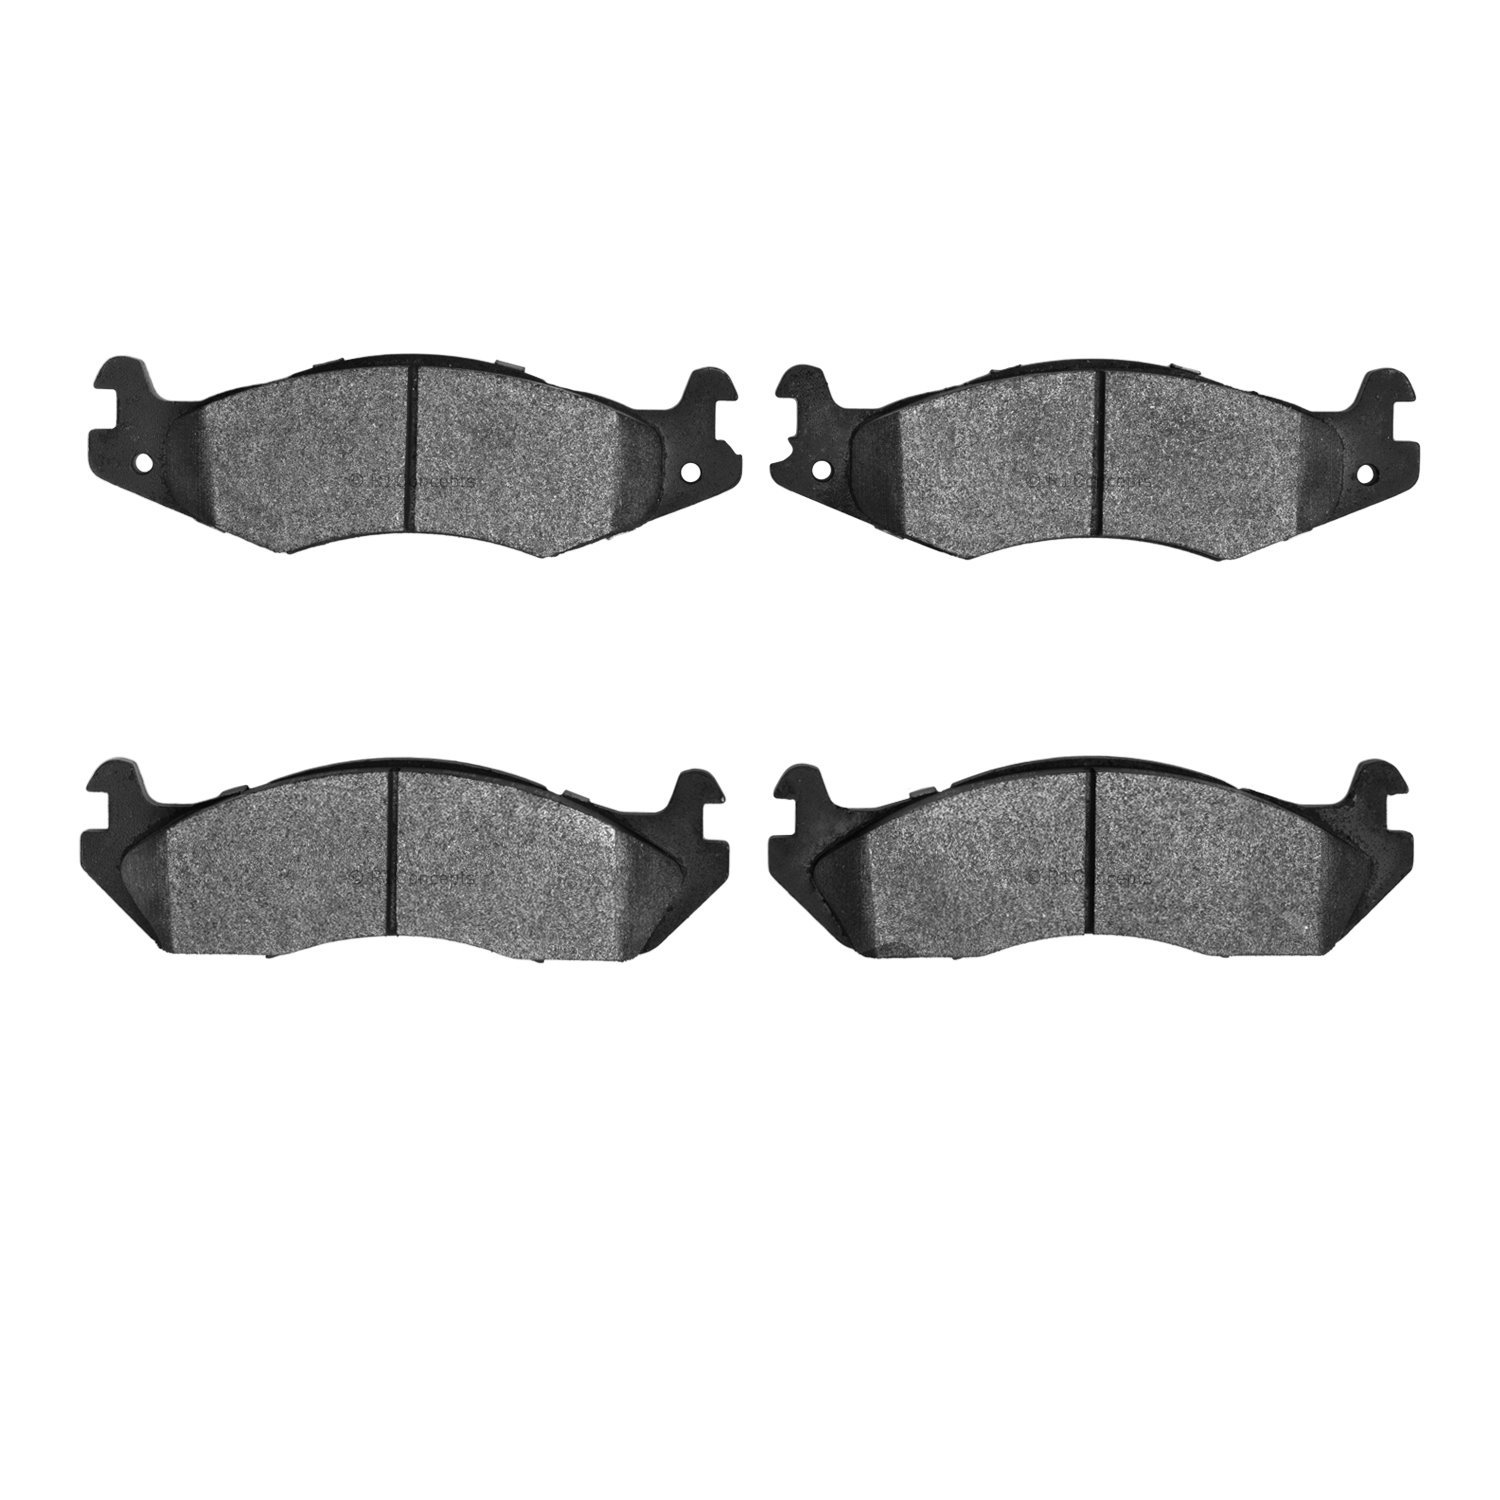 1310-0203-00 3000-Series Ceramic Brake Pads, 1982-1992 Multiple Makes/Models, Position: Front